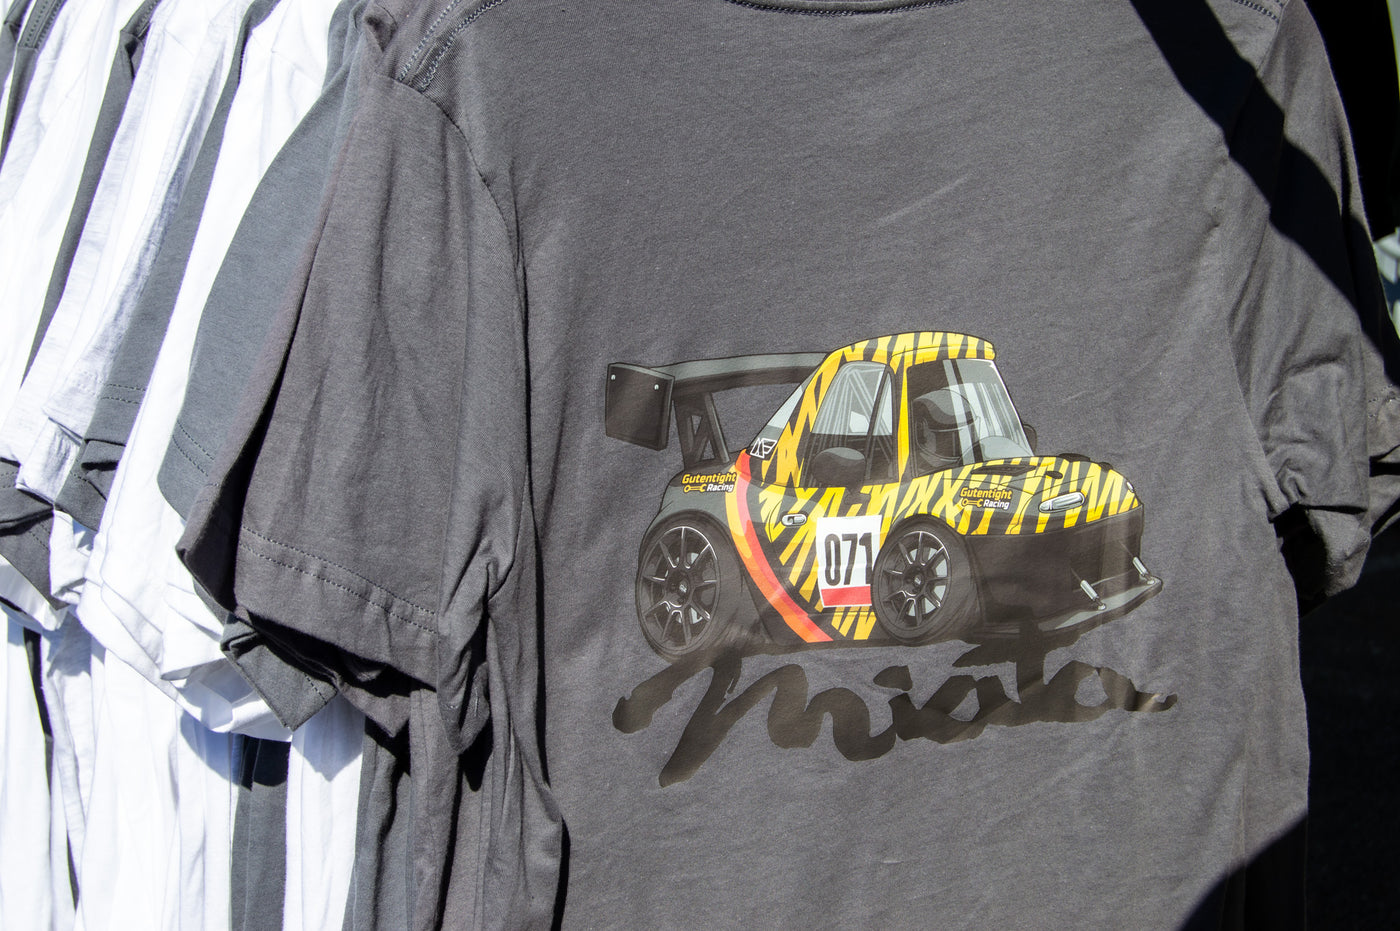 Mangrove Yellow NA Miata #071 Gutentight Racing T Shirt K24 Swapped